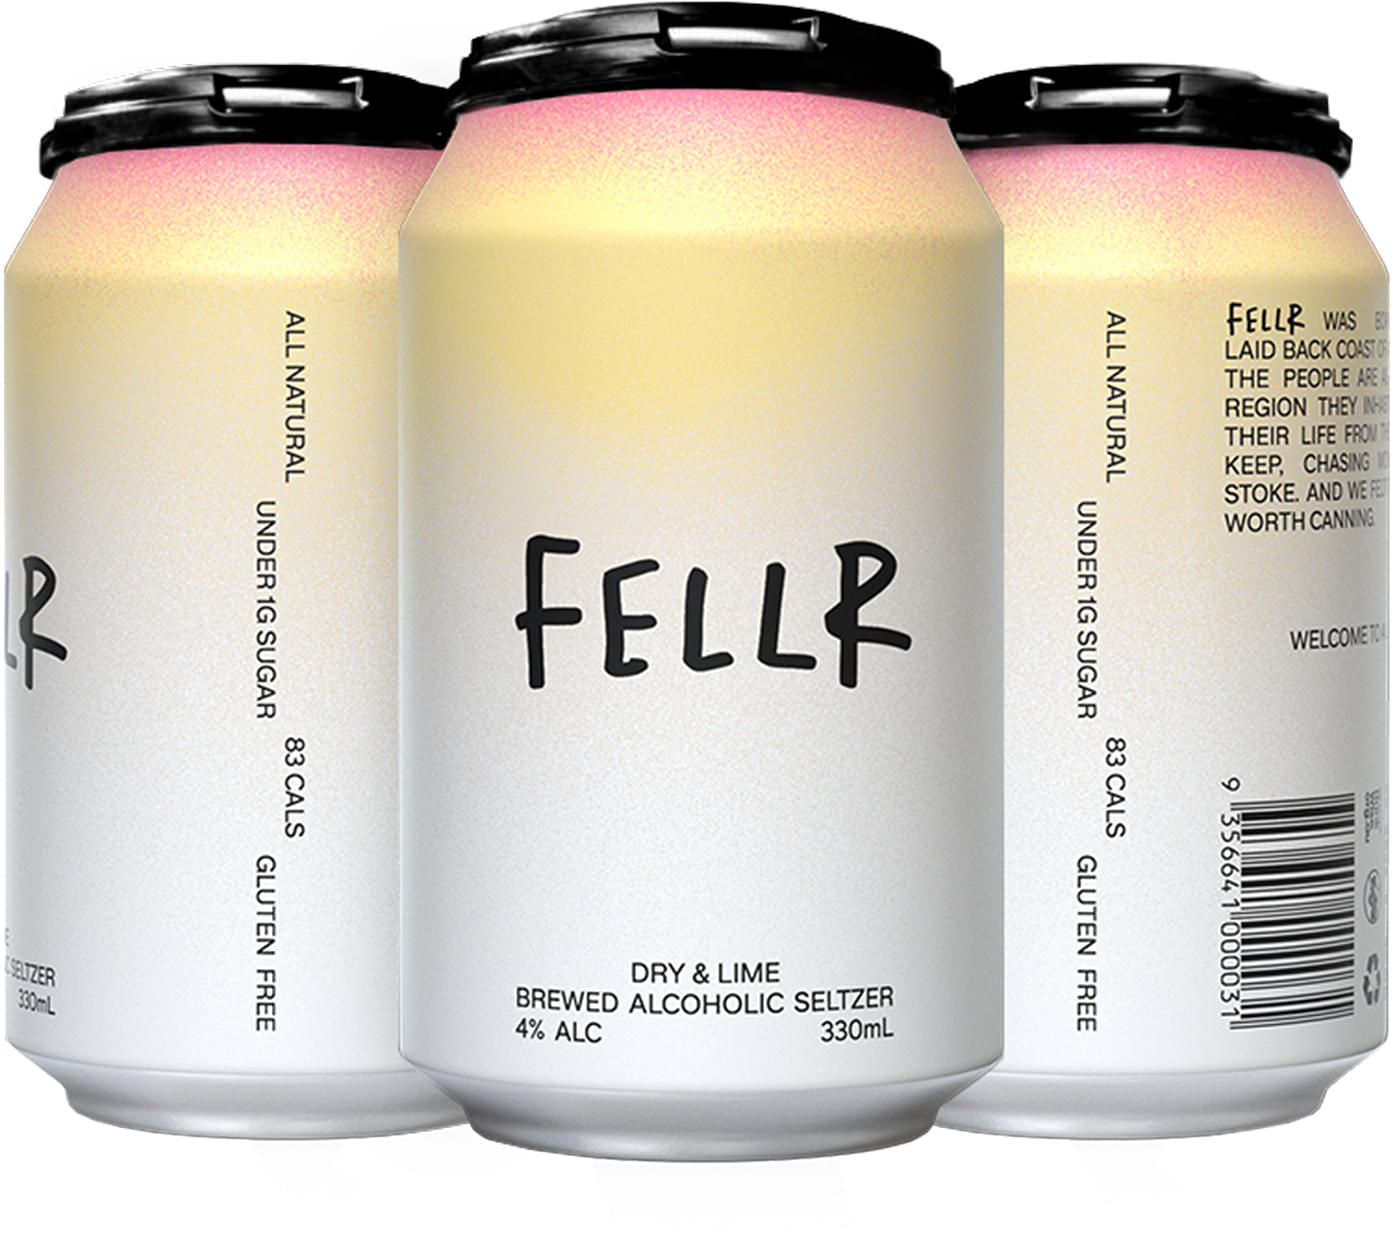 Fellr Dry & Lime Brewed Alcoholic Seltzer